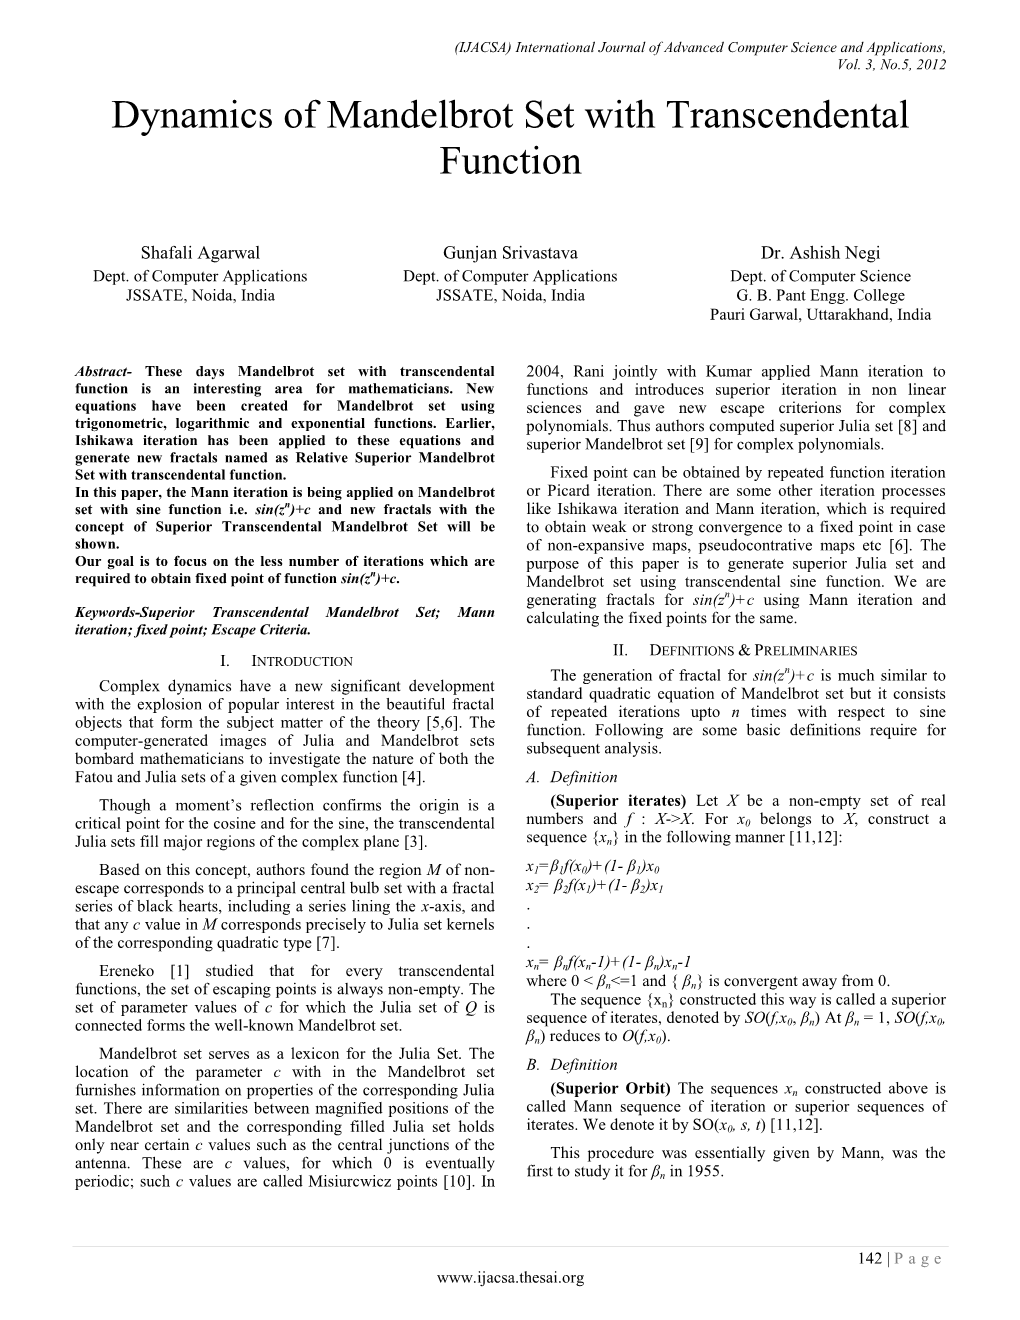 Dynamics of Mandelbrot Set with Transcendental Function